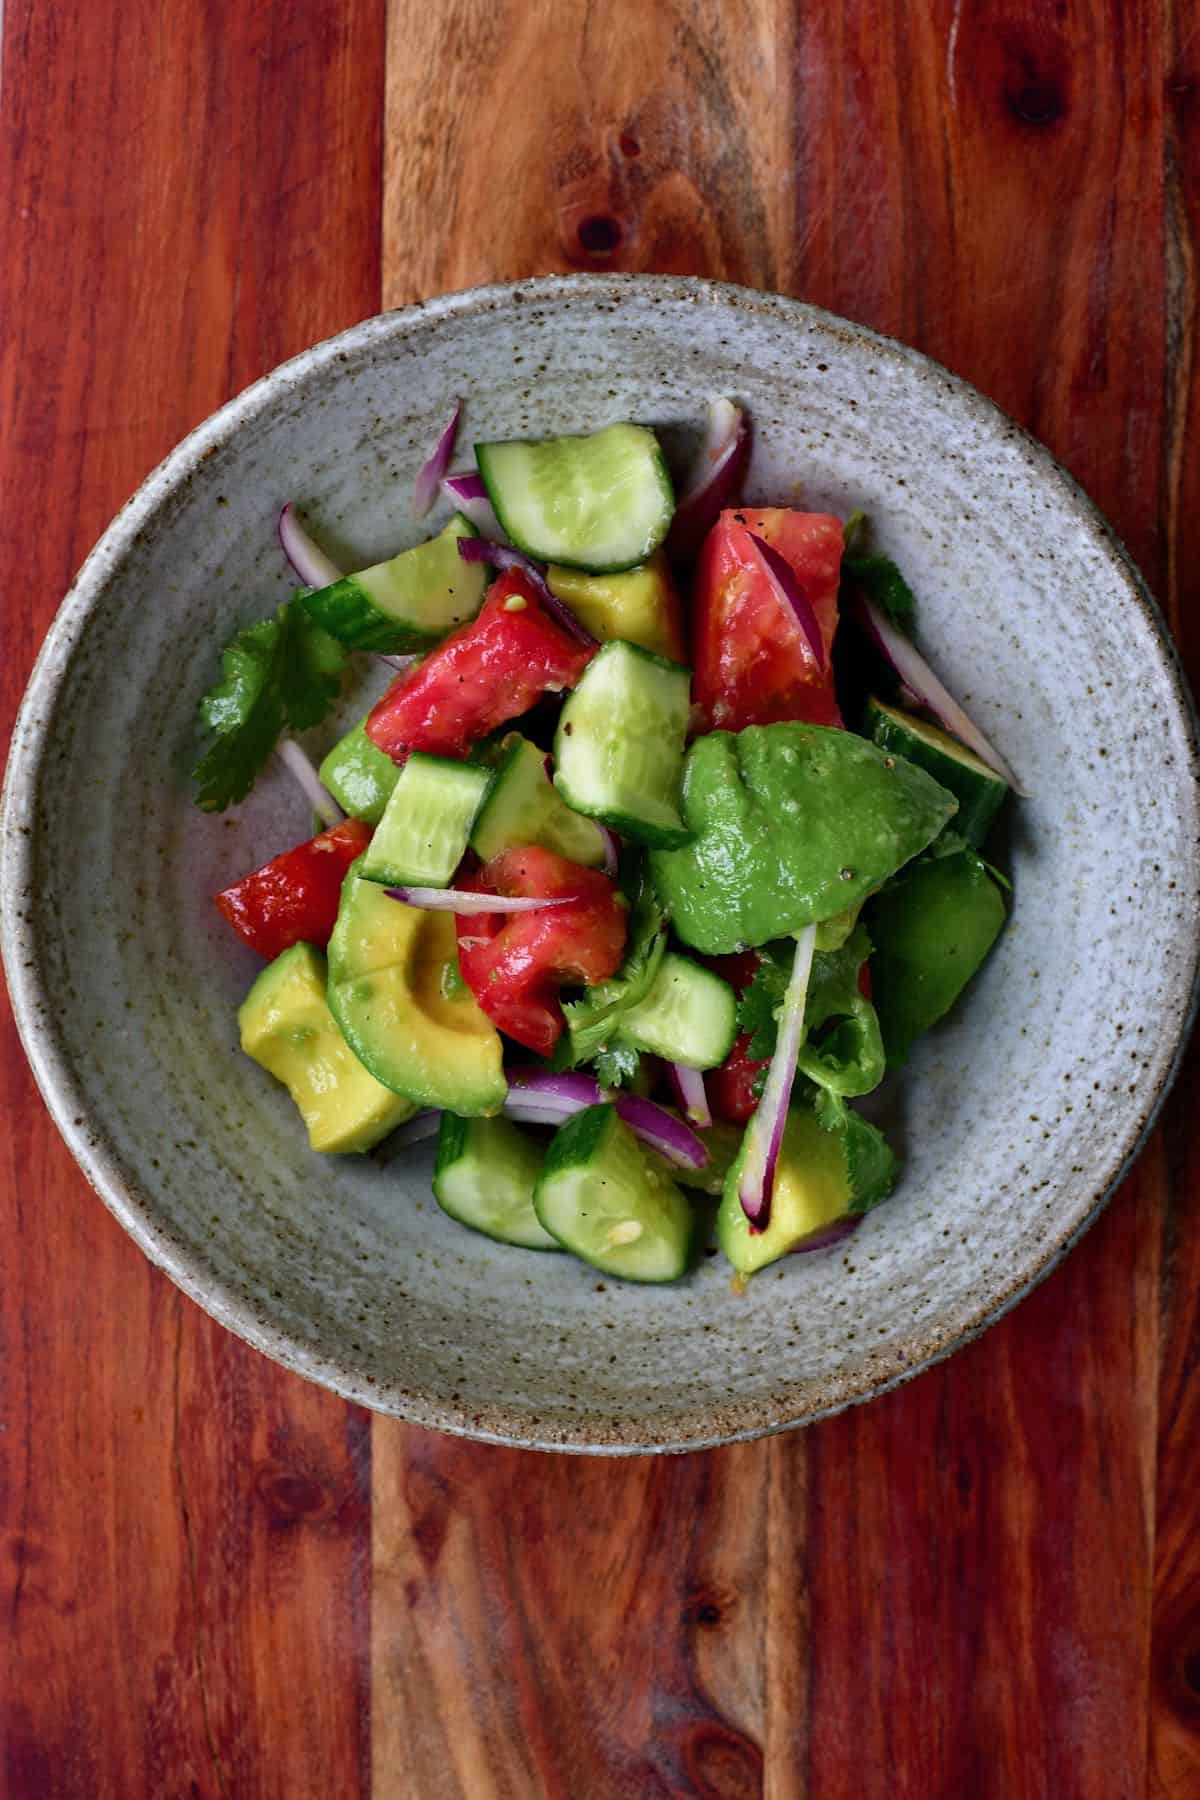 A serving of avocado cucumber tomato salad